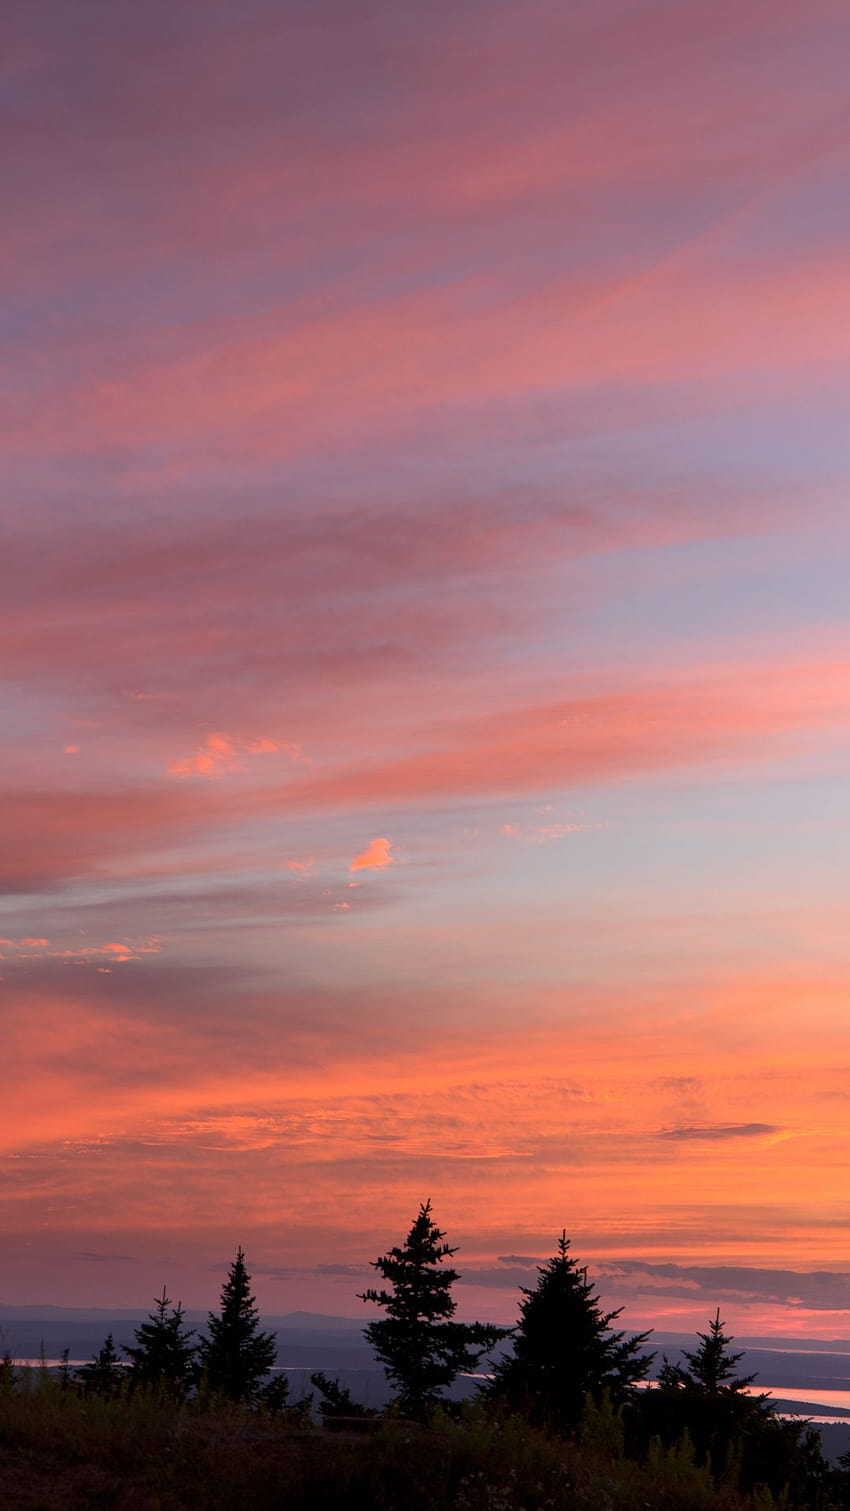 dawn sky background